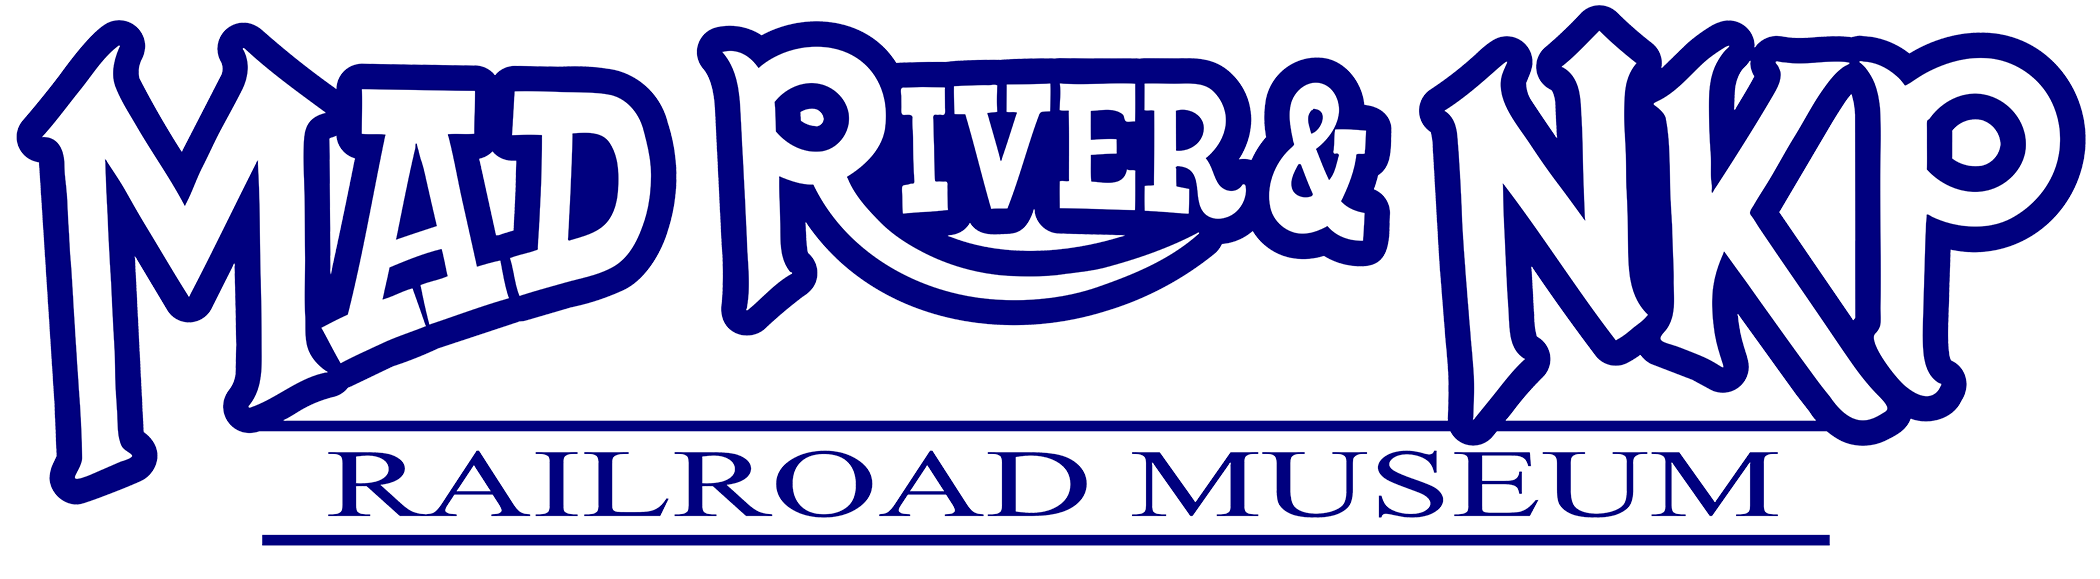 Mad River & NKP Railroad Museum